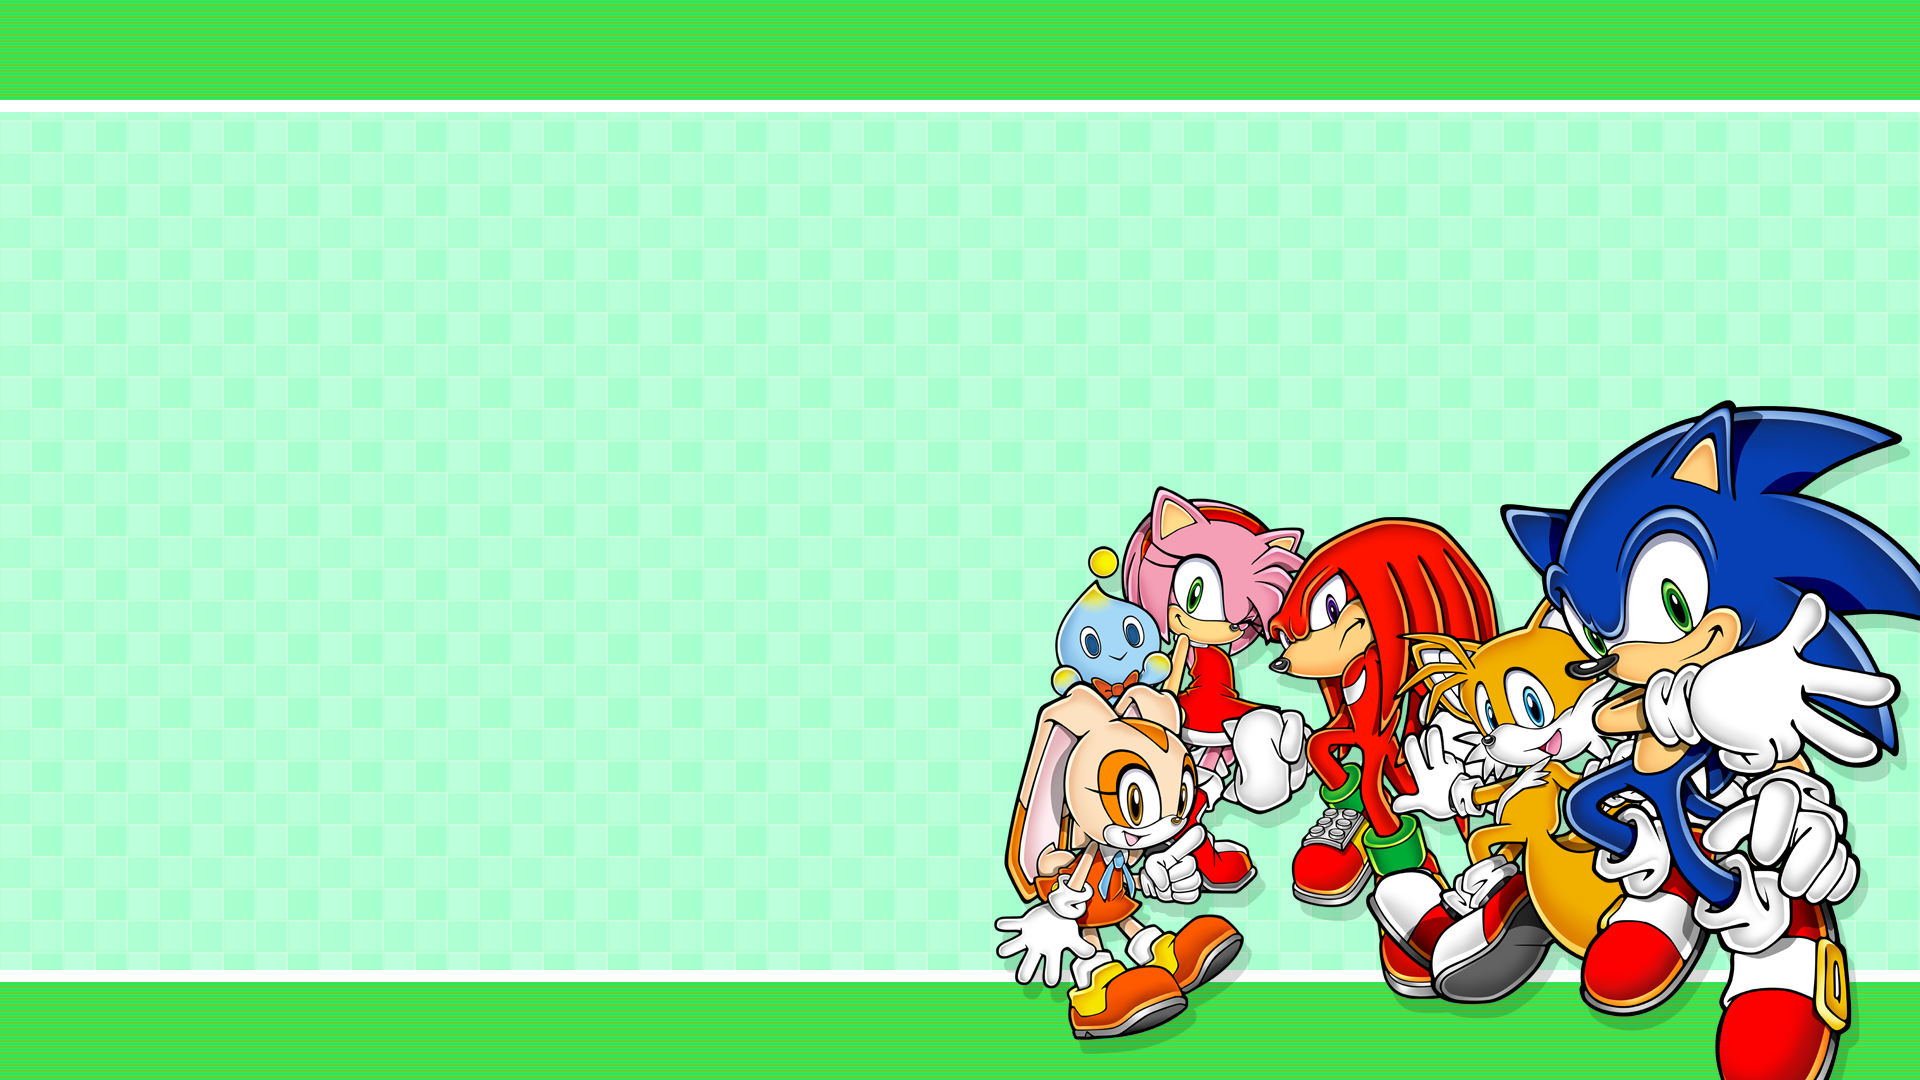 Sonic Advance 3 Wallpaper (1920x1080): SonicTheHedgehog